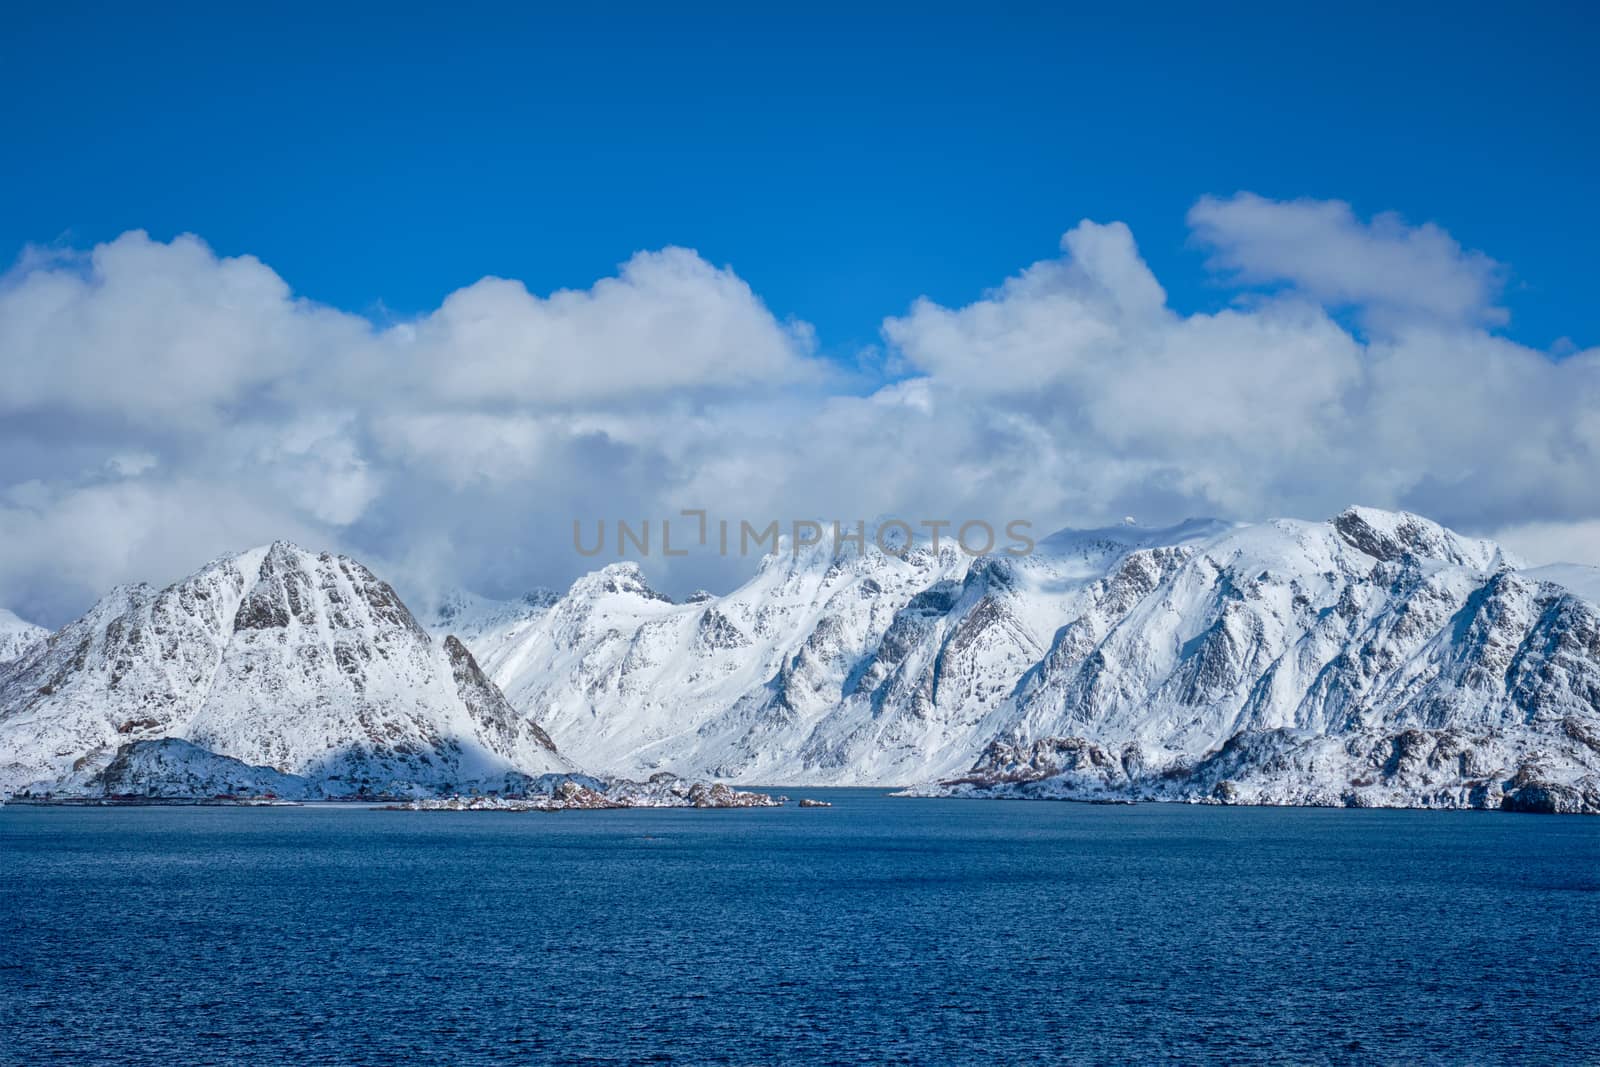 Lofoten islands and Norwegian sea in winter, Norway by dimol